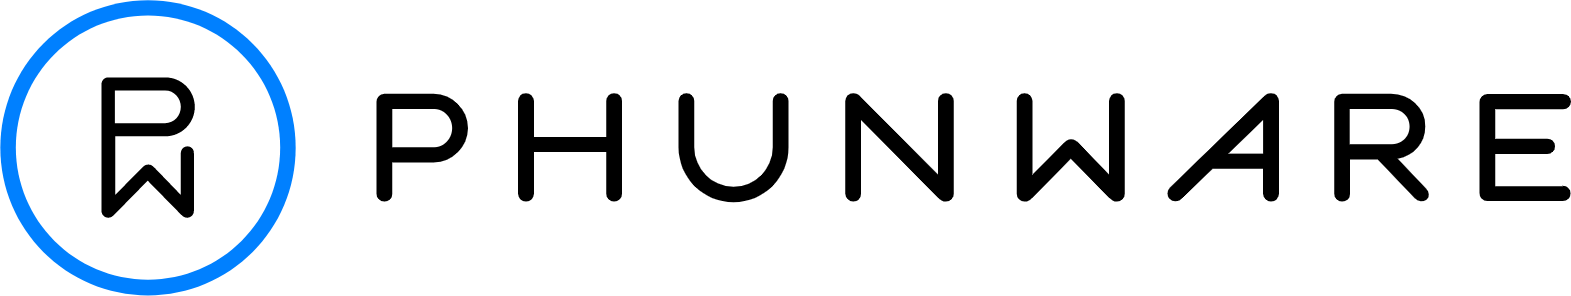 Phunware logo large (transparent PNG)